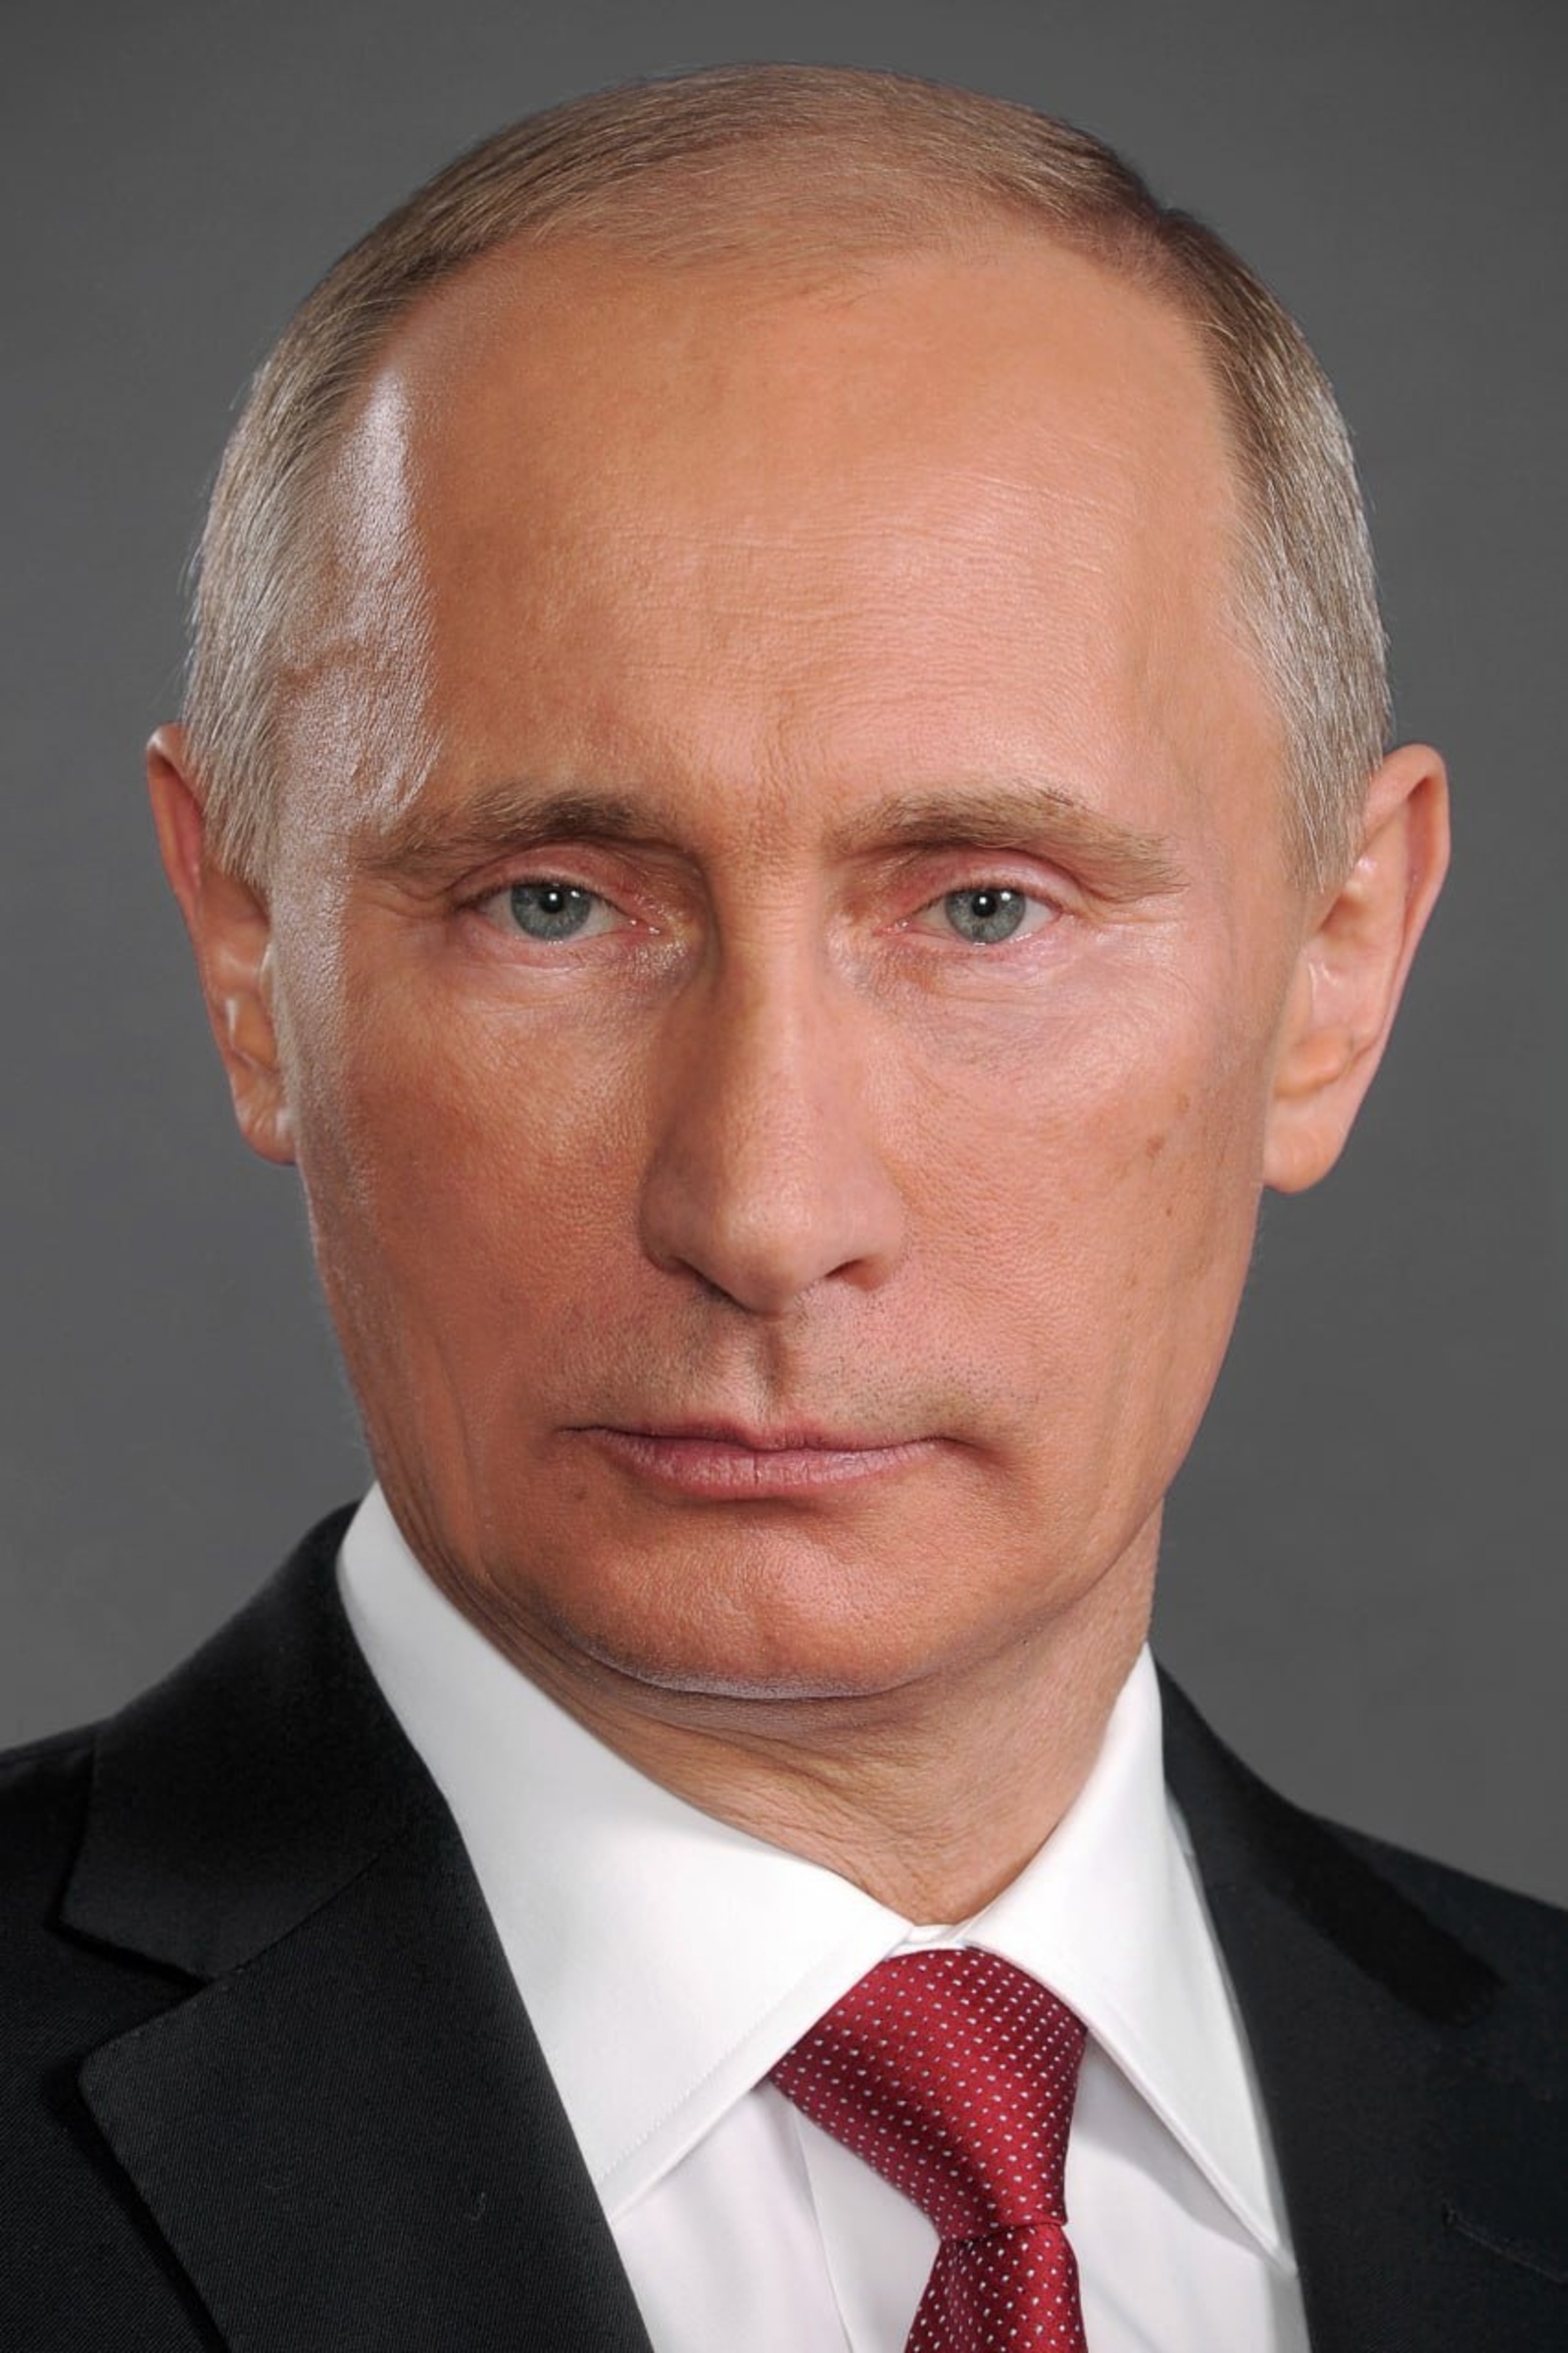 Максим Забелин поздравил с днём рождения президента России Владимира Путина